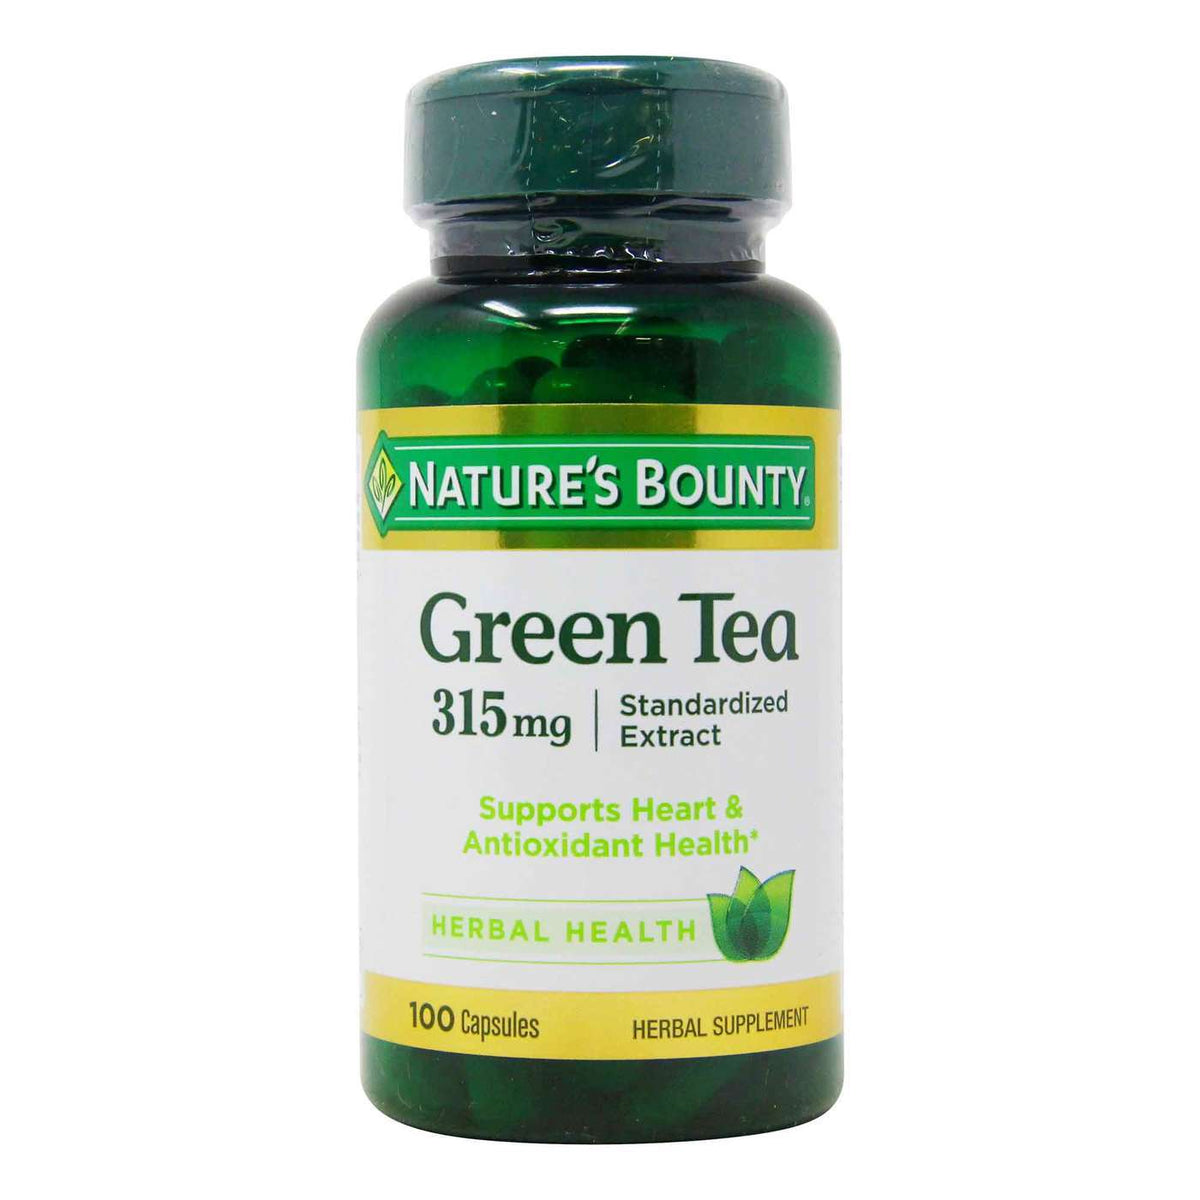 Nature's Bounty Green Tea Extract 315 mg - 100 Capsules